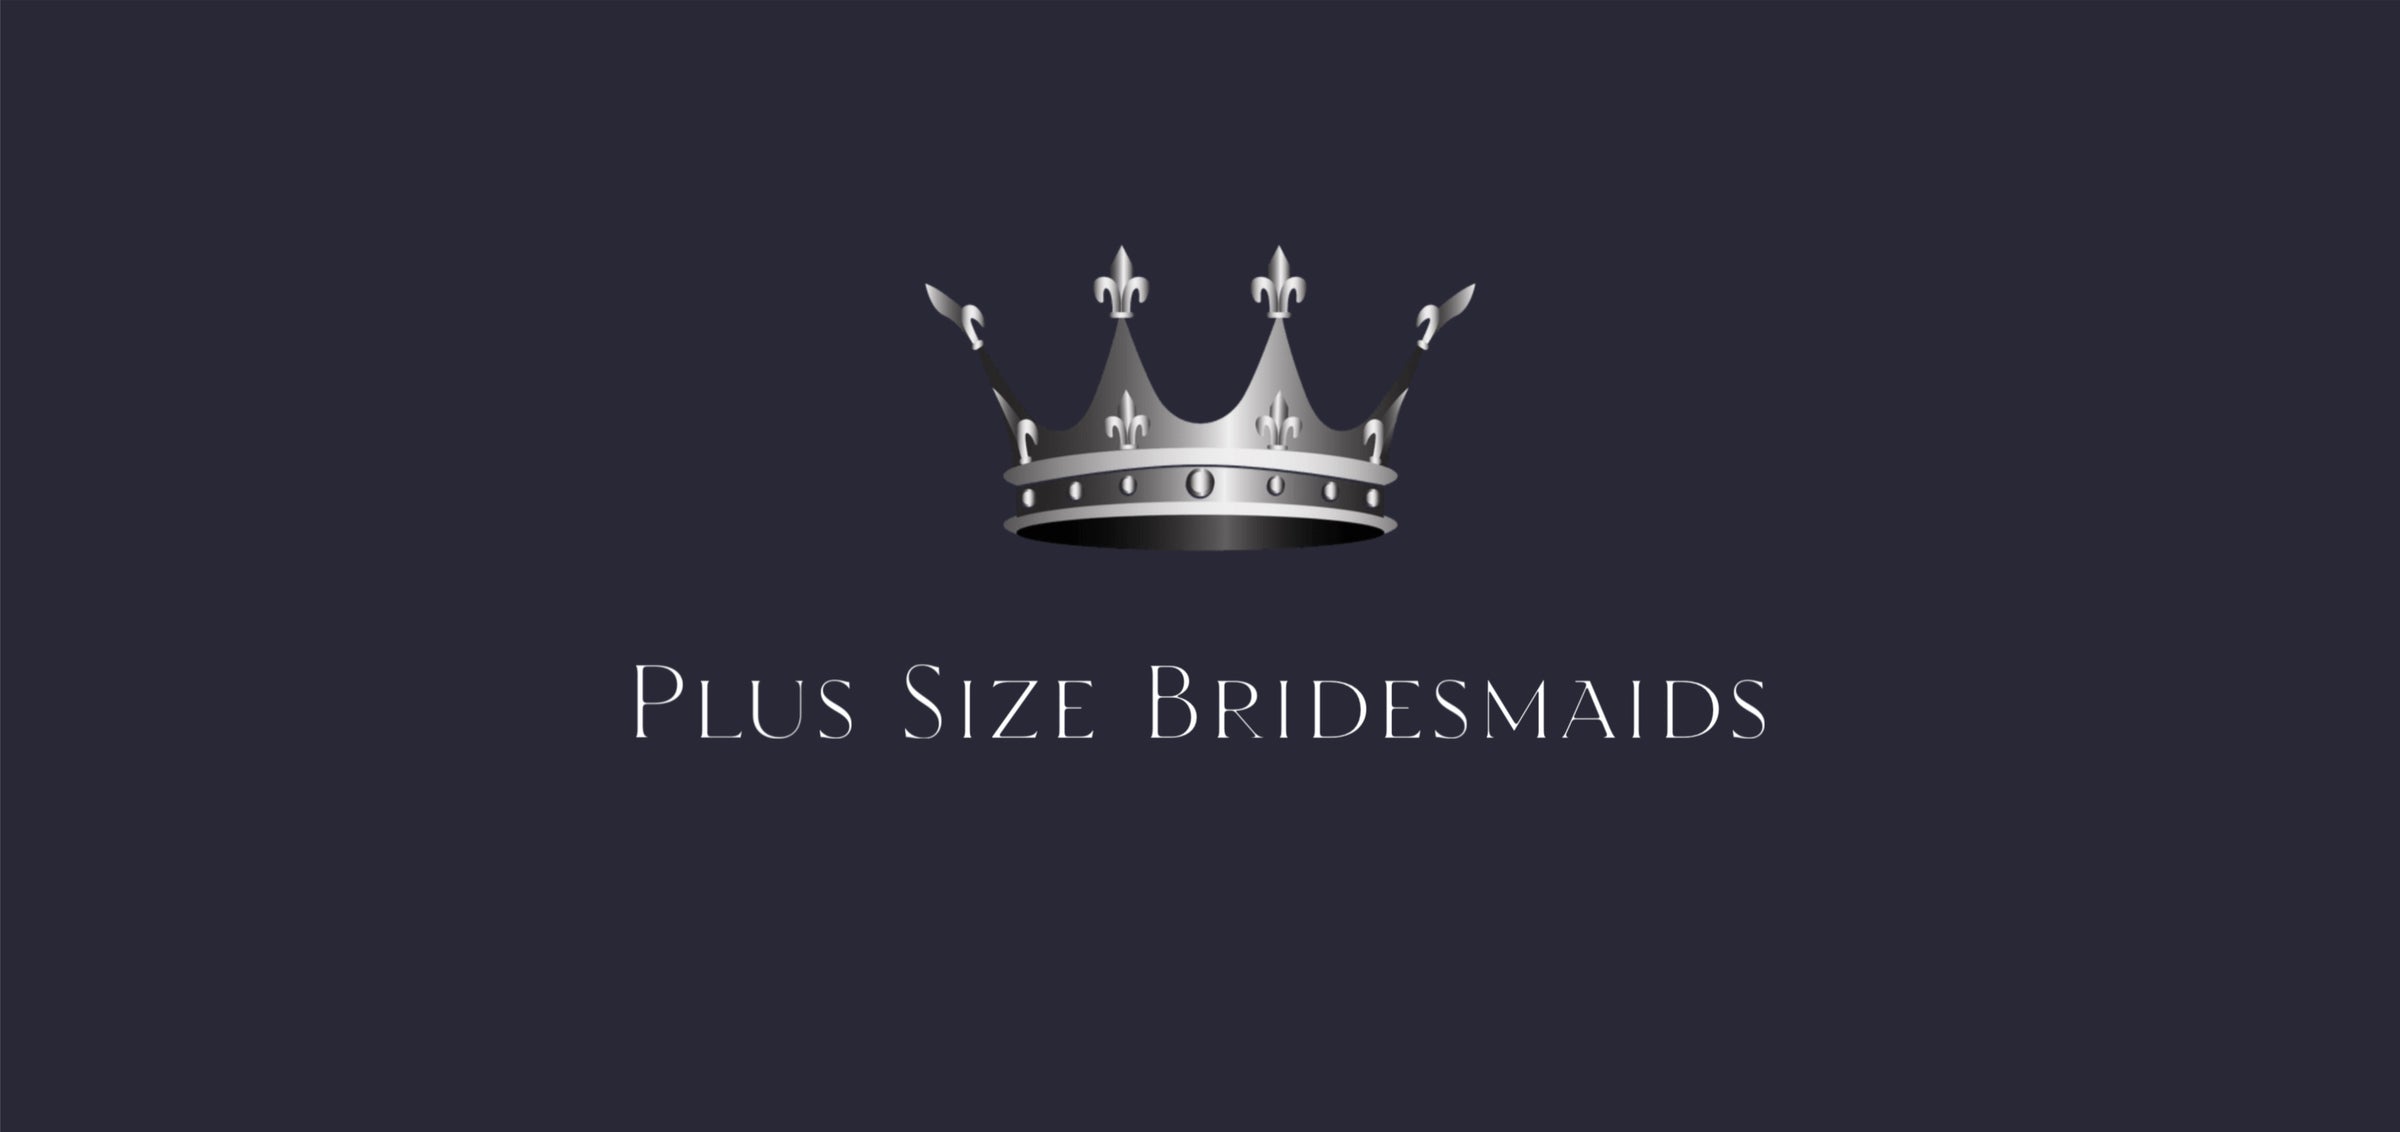 Plus Size Bridesmaids